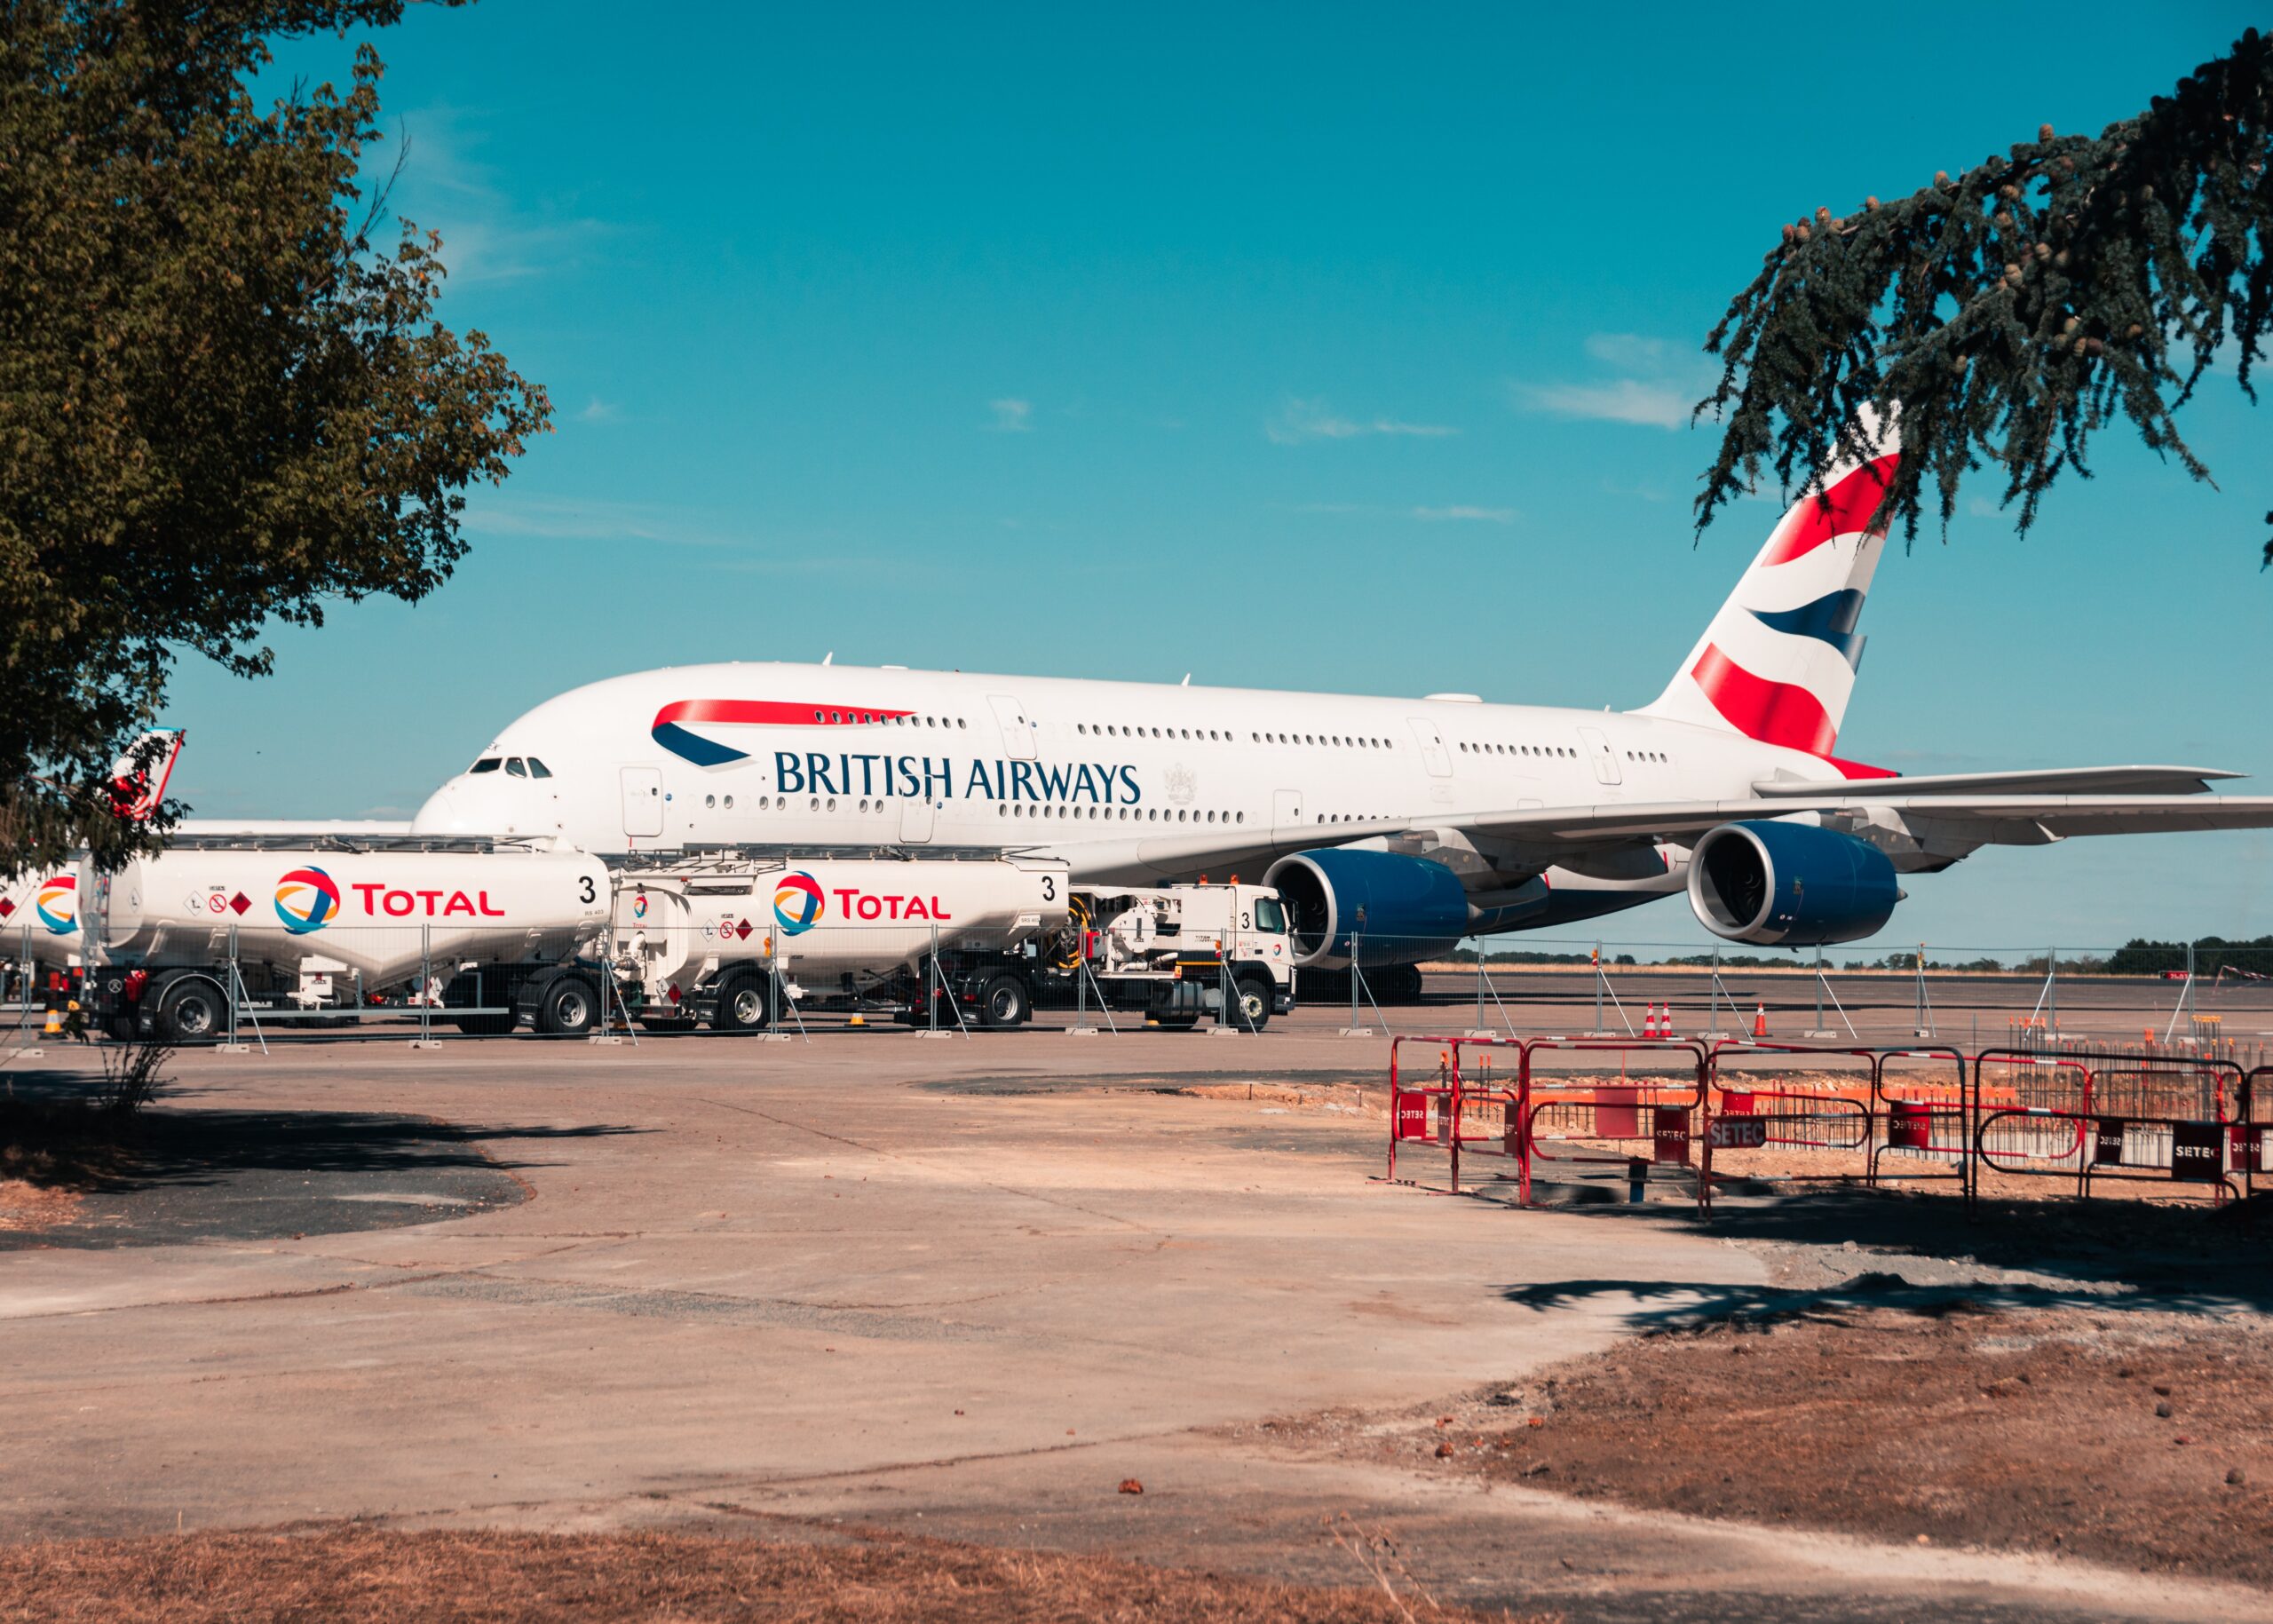 Virgin Atlantic Airlines vs British Airways